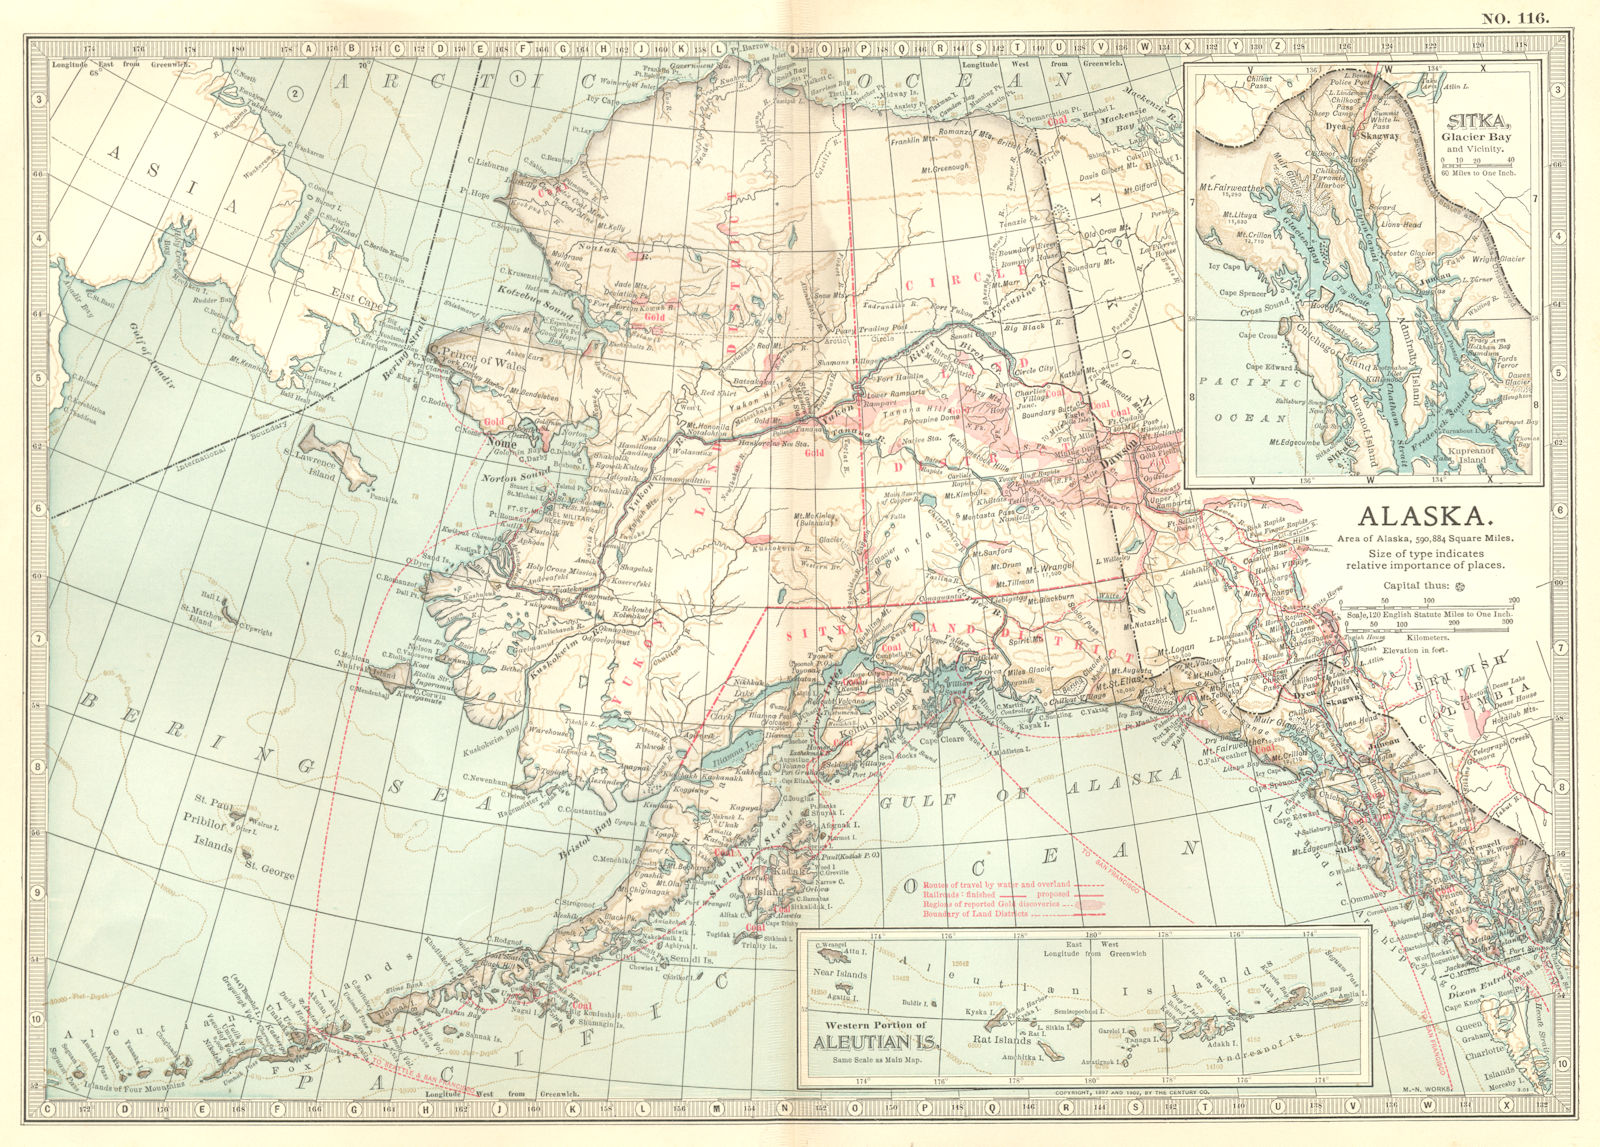 ALASKA. Showing boroughs. Inset Aleutian Isles, Sitka, Glacier Bay  1903 map